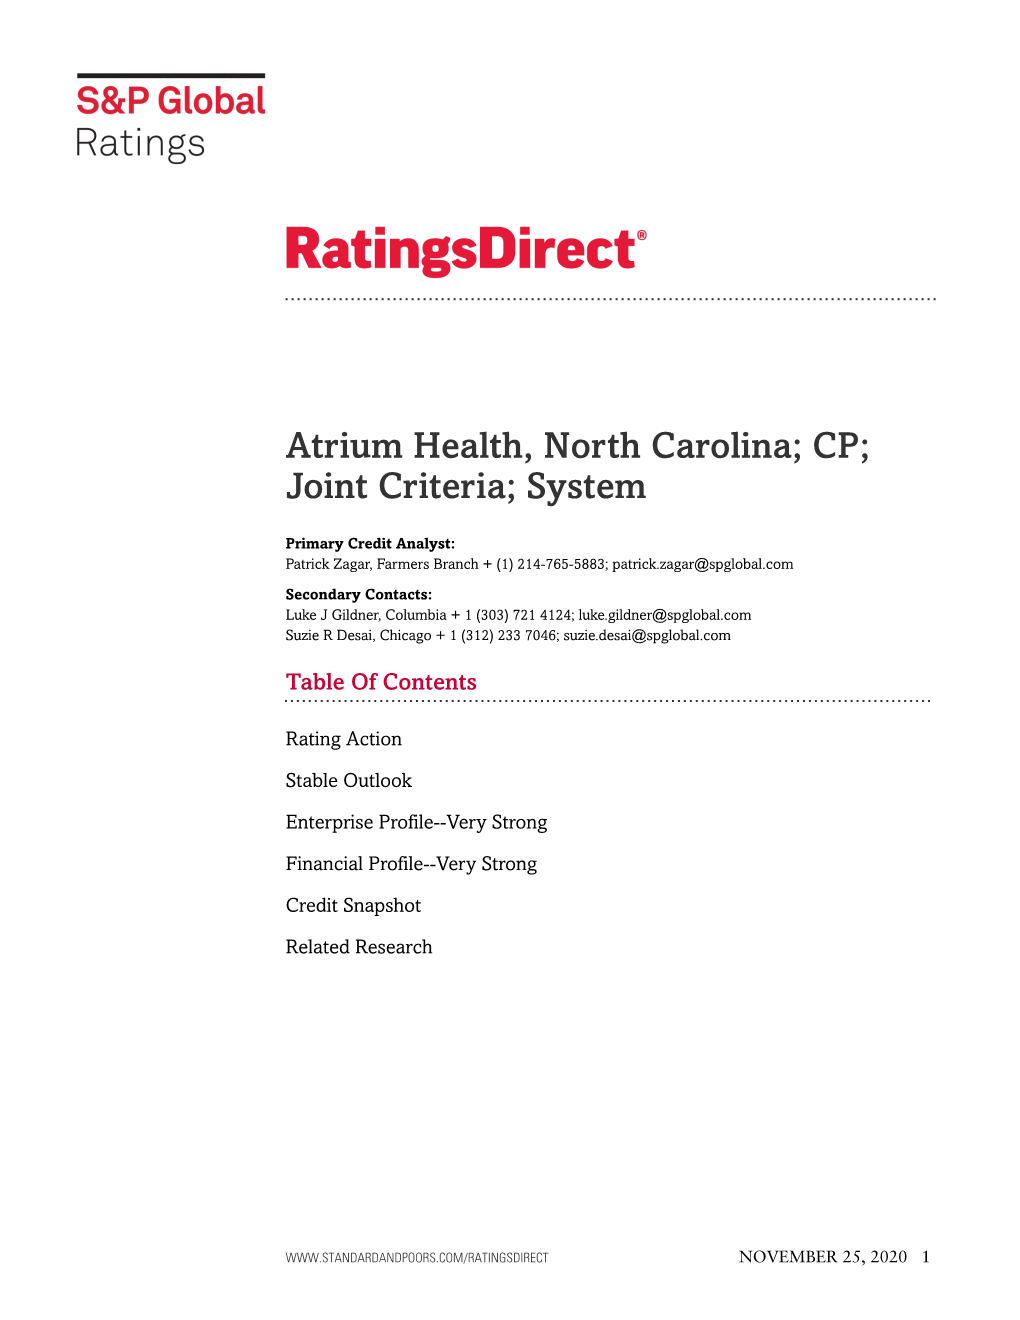 Atrium Health, North Carolina; CP; Joint Criteria; System